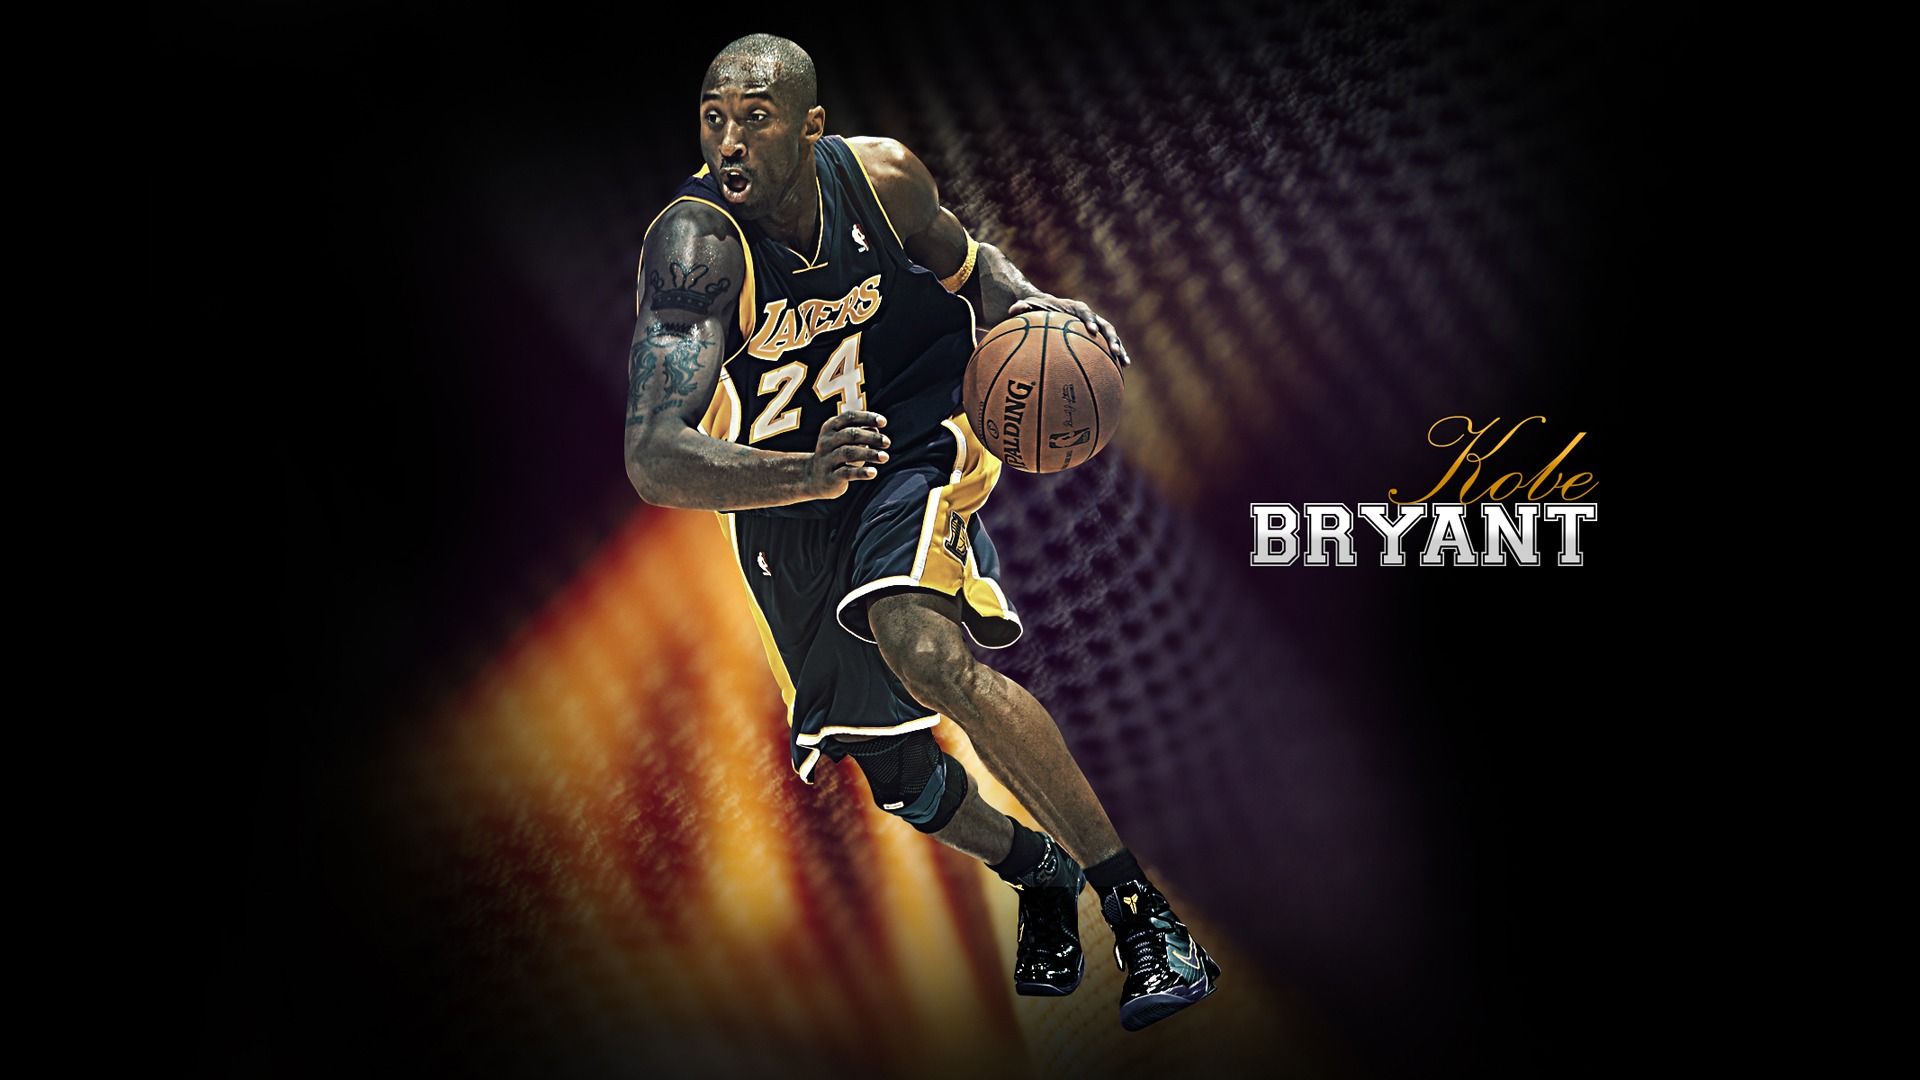 Kobe Bryant Wallpaper NBA Sports Wallpapers en formato jpg gratis